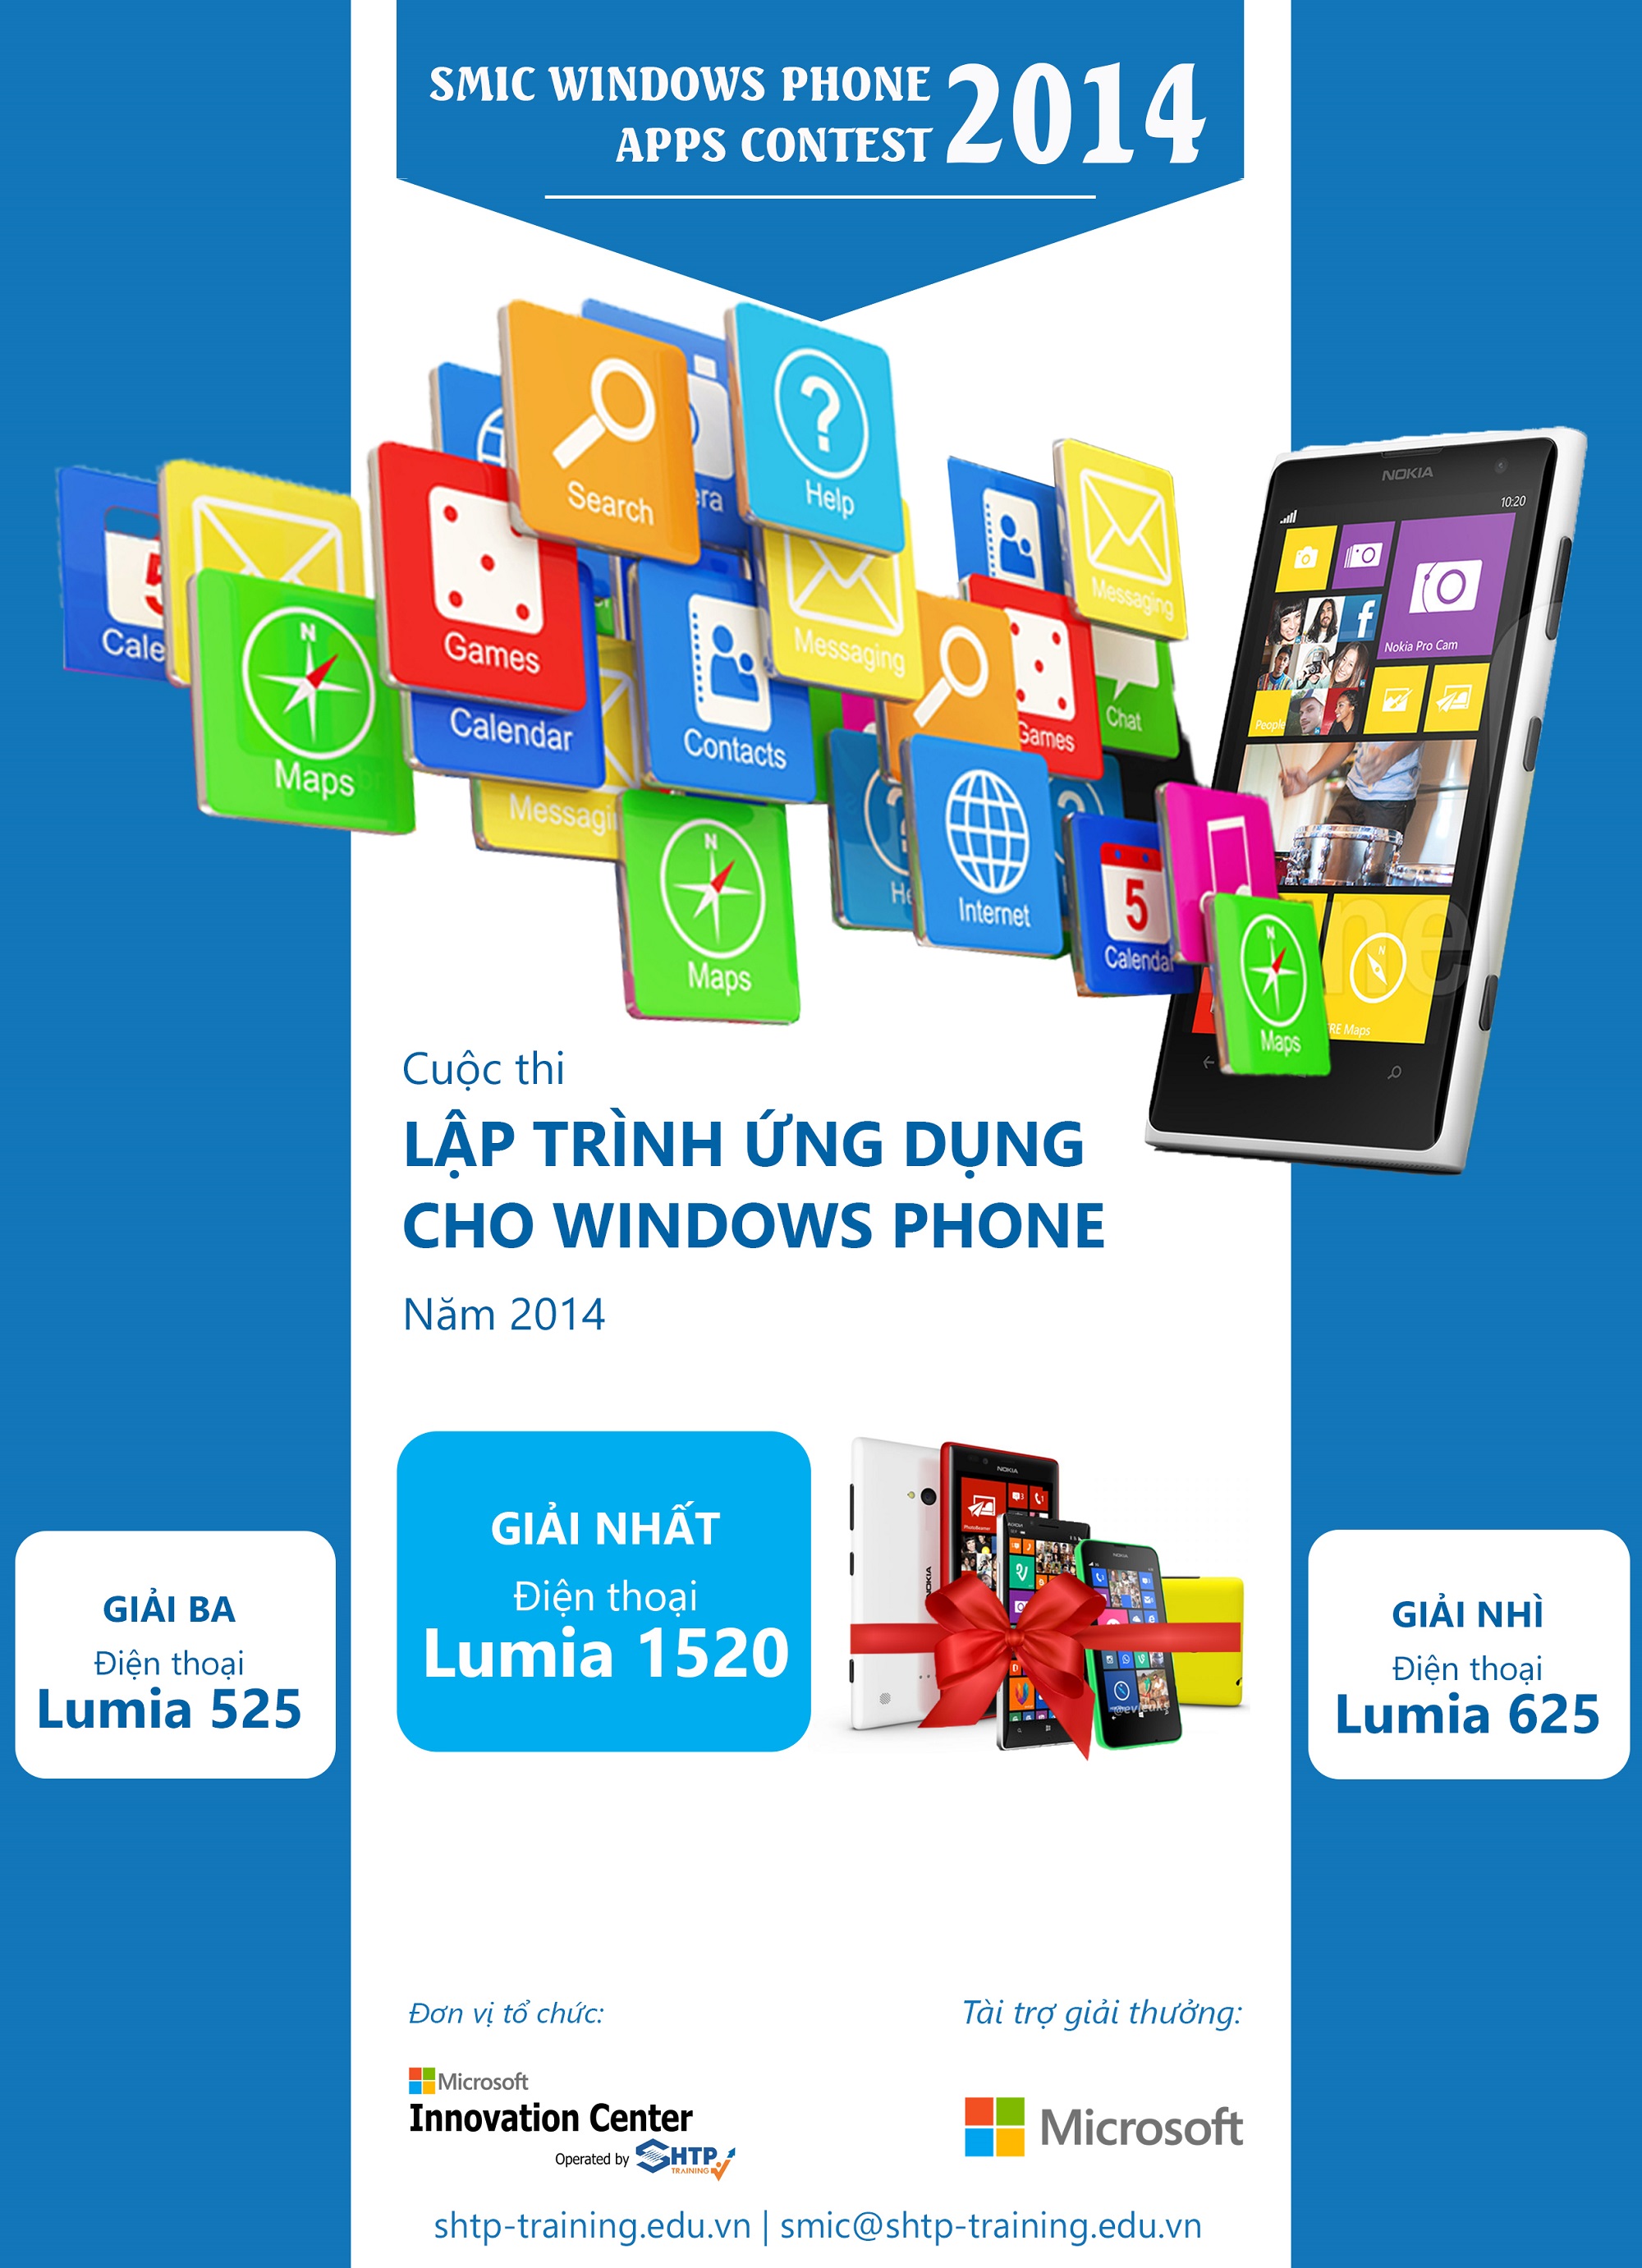 Announcement] SMIC Windows Phone Apps Contest 2014 - School of 